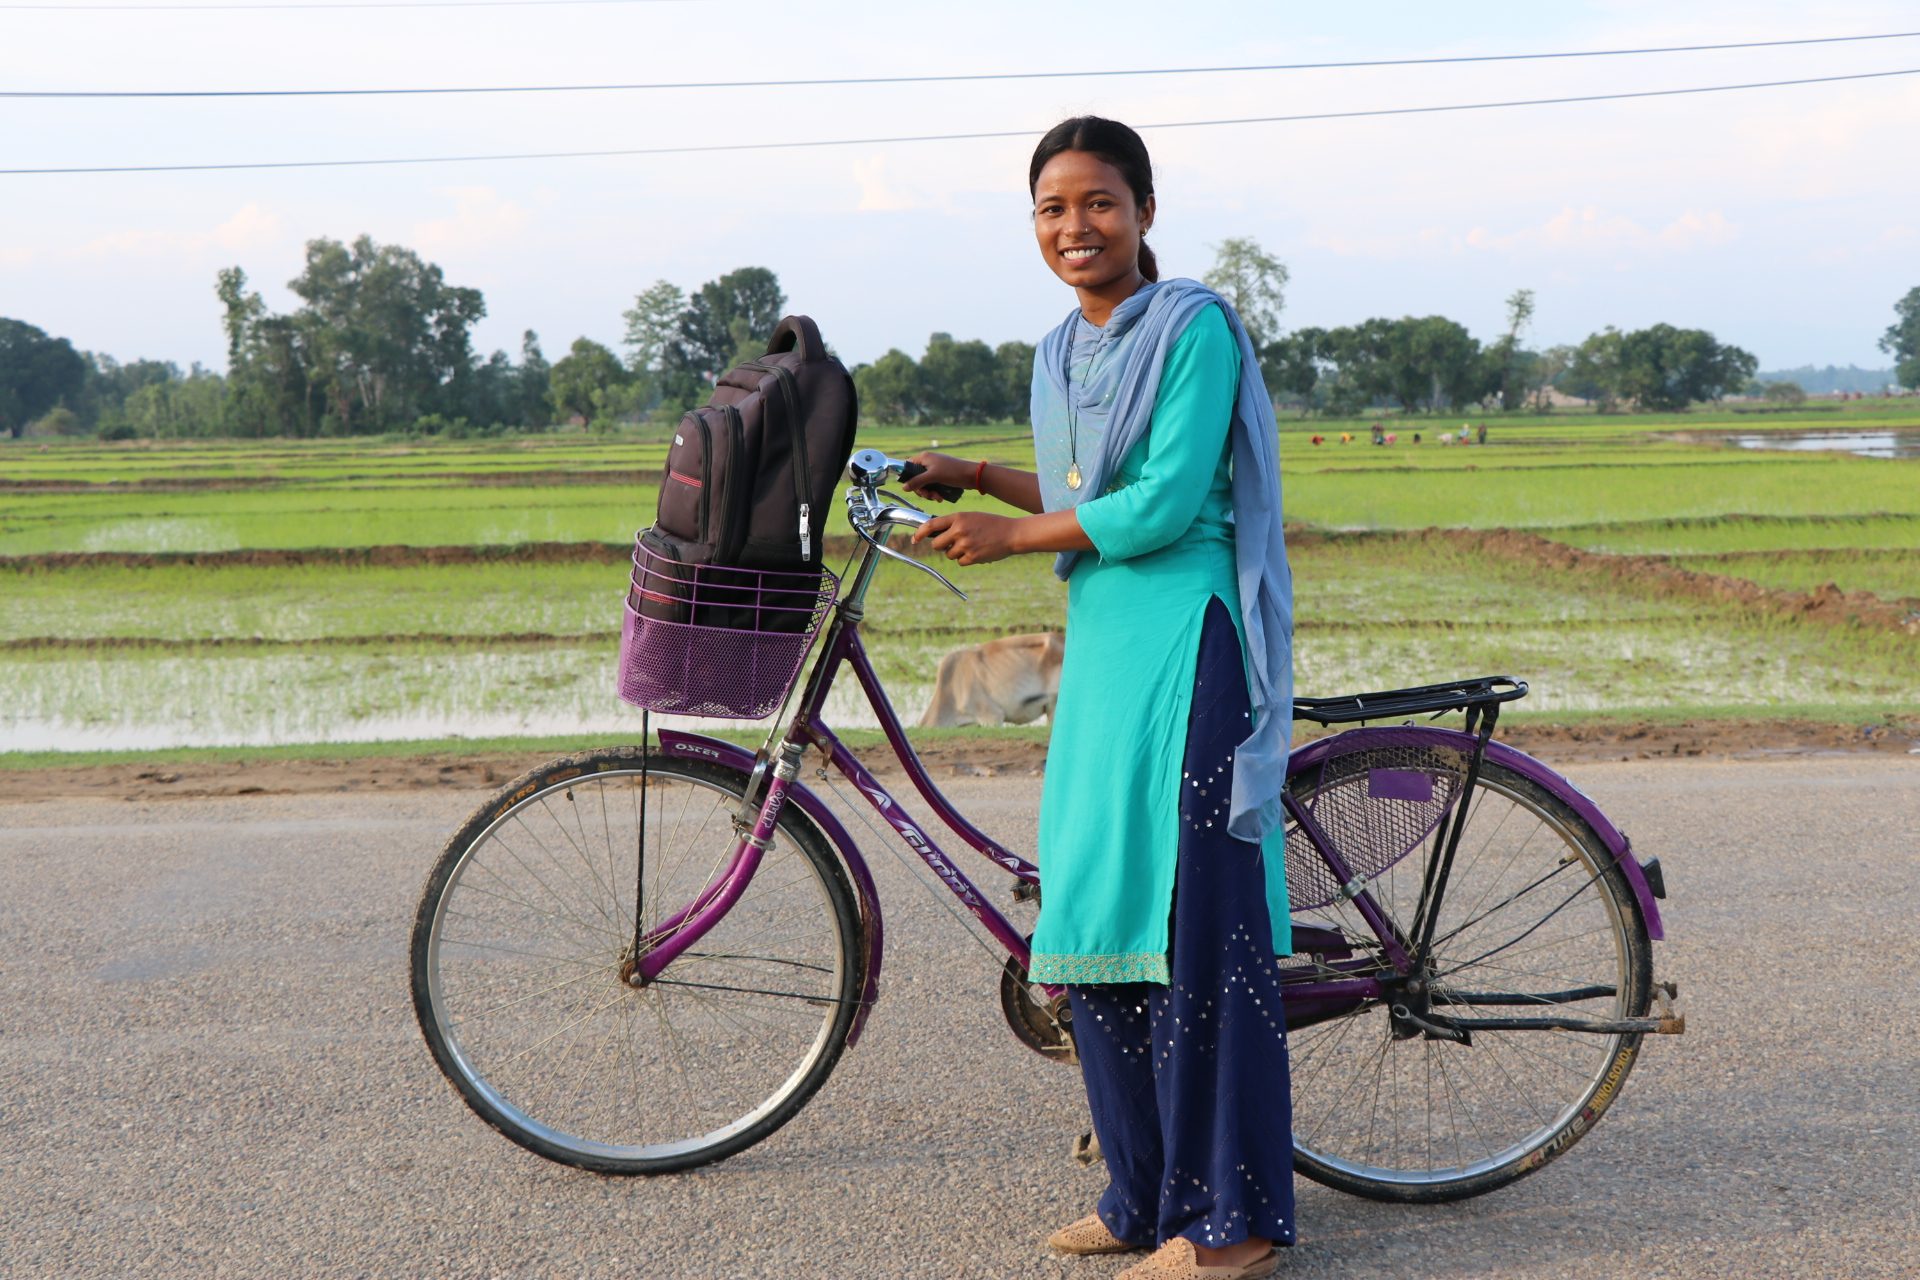 Asha travels around her community on her bicycle